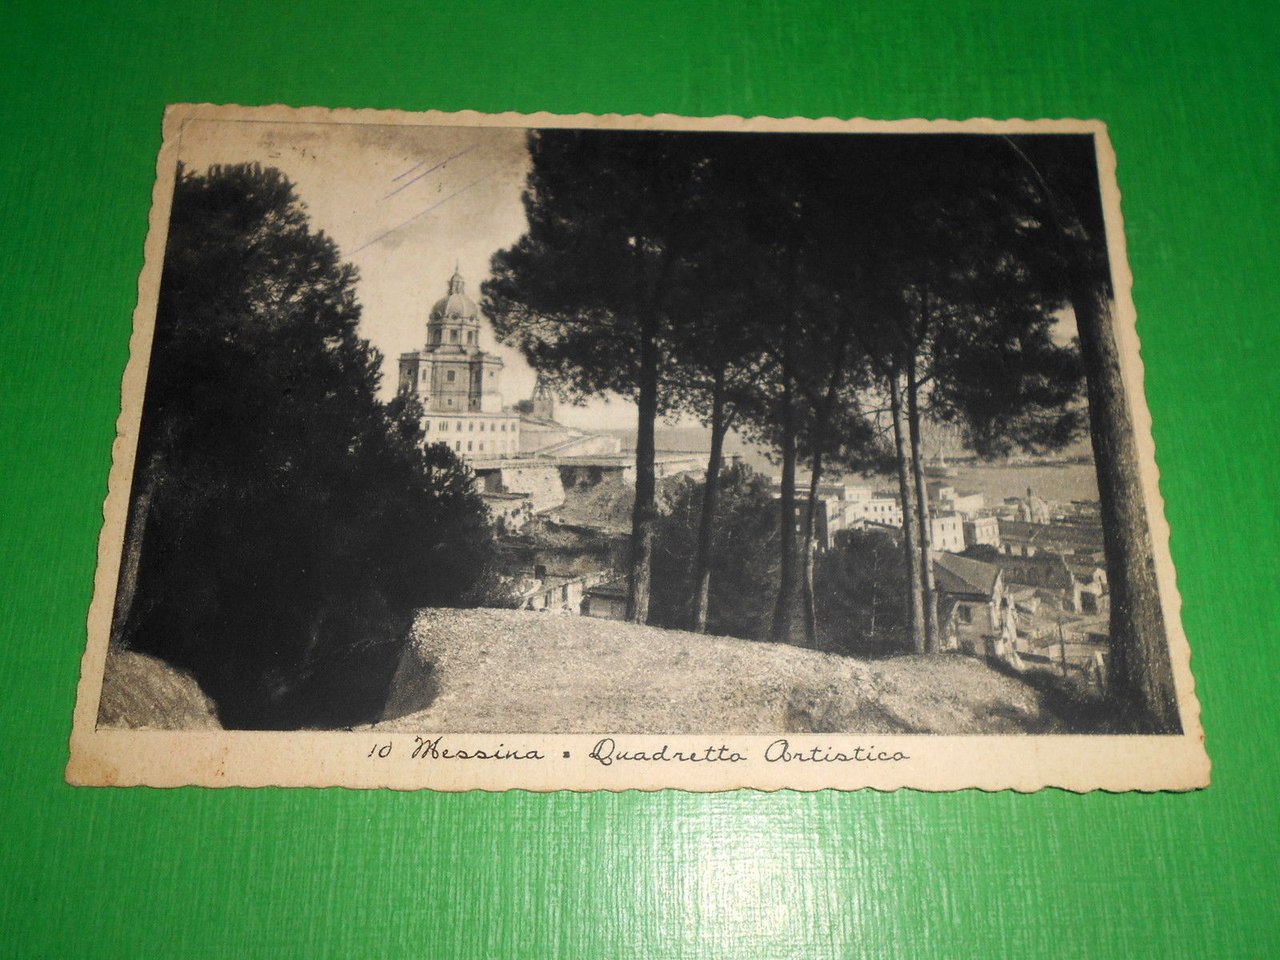 Cartolina Messina - Quadretto artistico 1941.